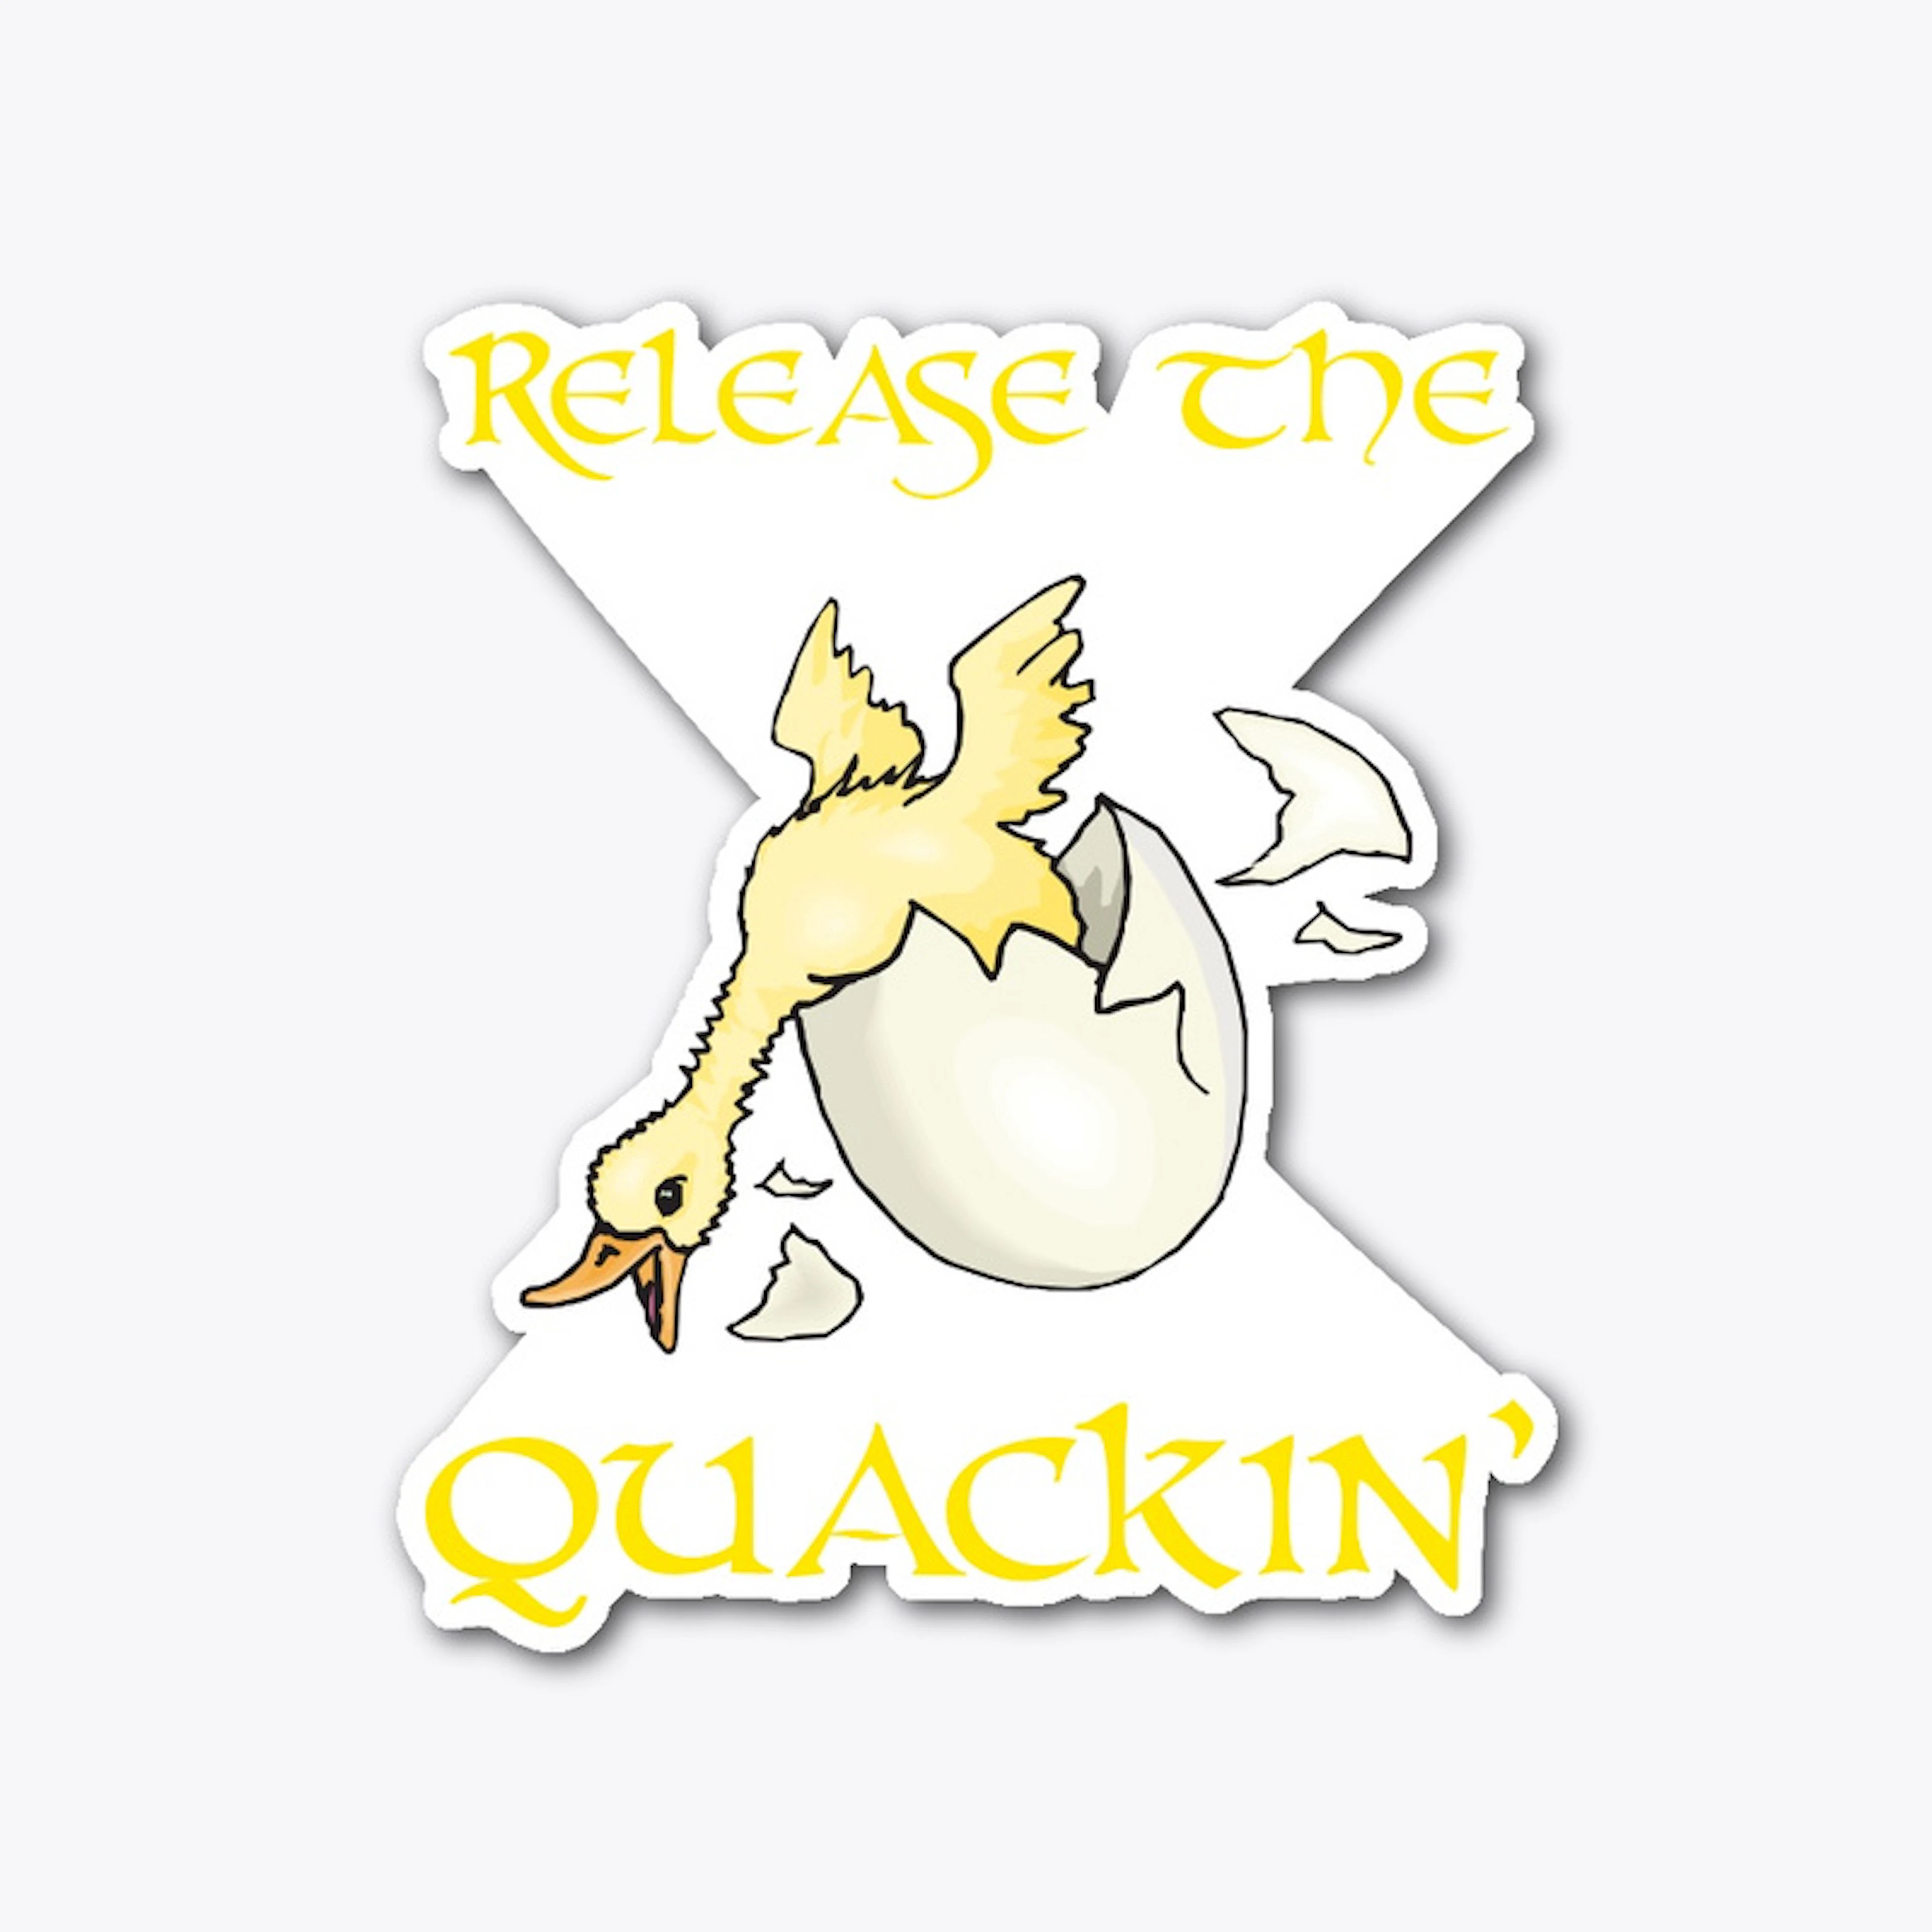 Release the Quackin'